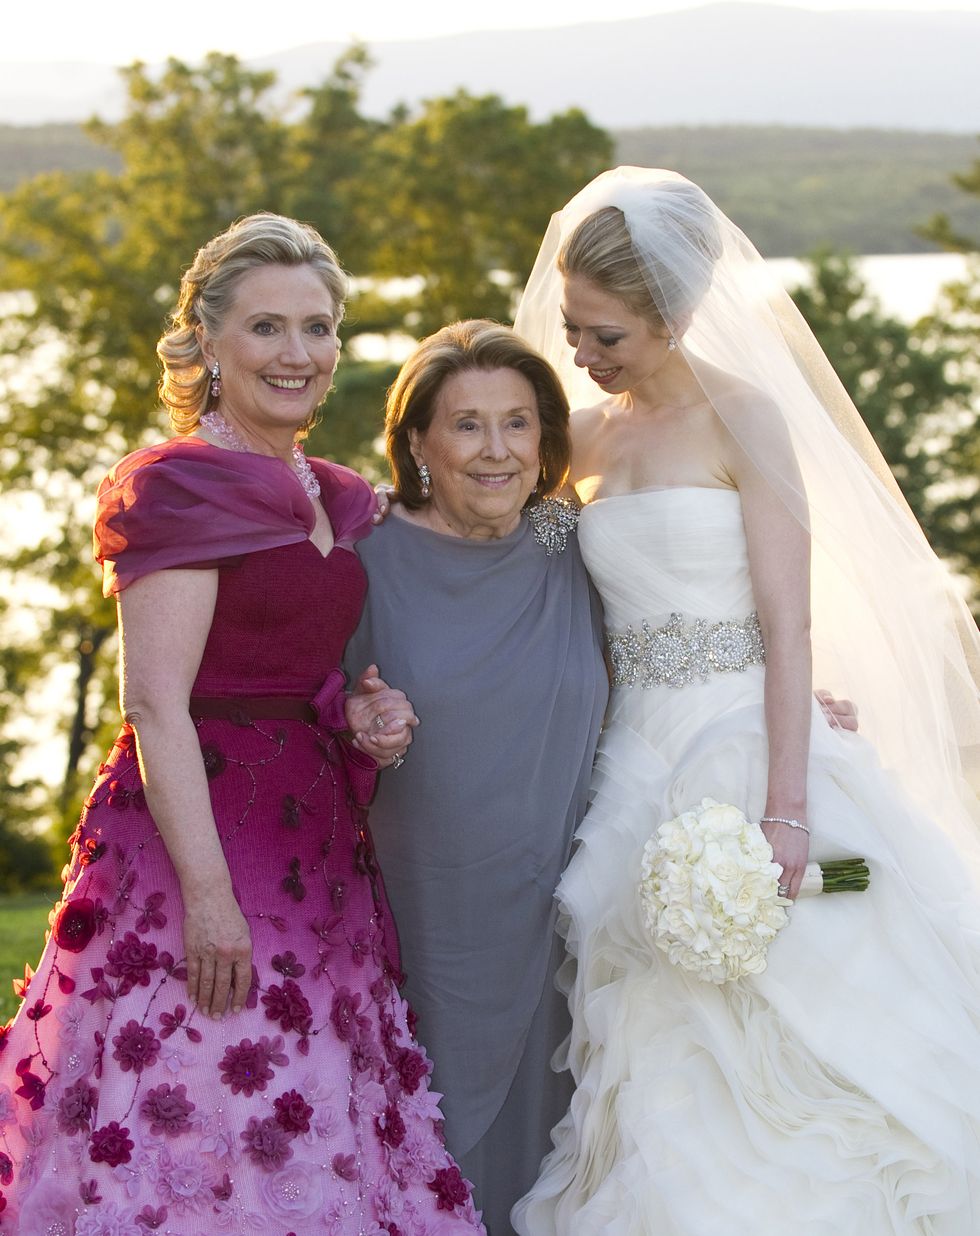 Hillary Clinton at daughter's wedding | ELLE UK